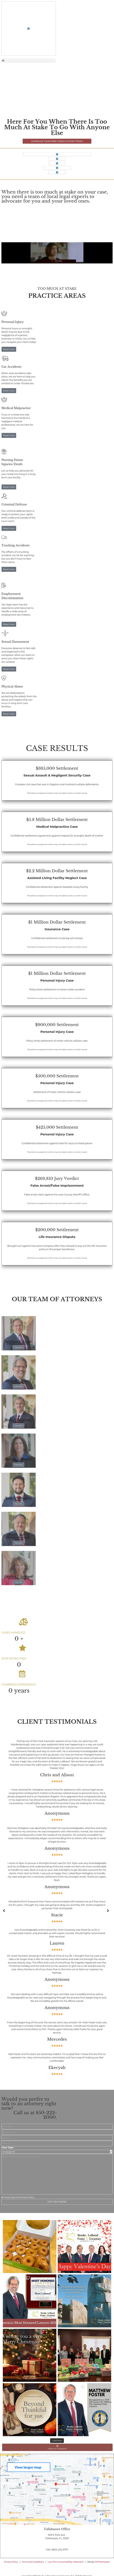 Brooks LeBoeuf Bennett Foster & Gwartney PA - Tallahassee FL Lawyers